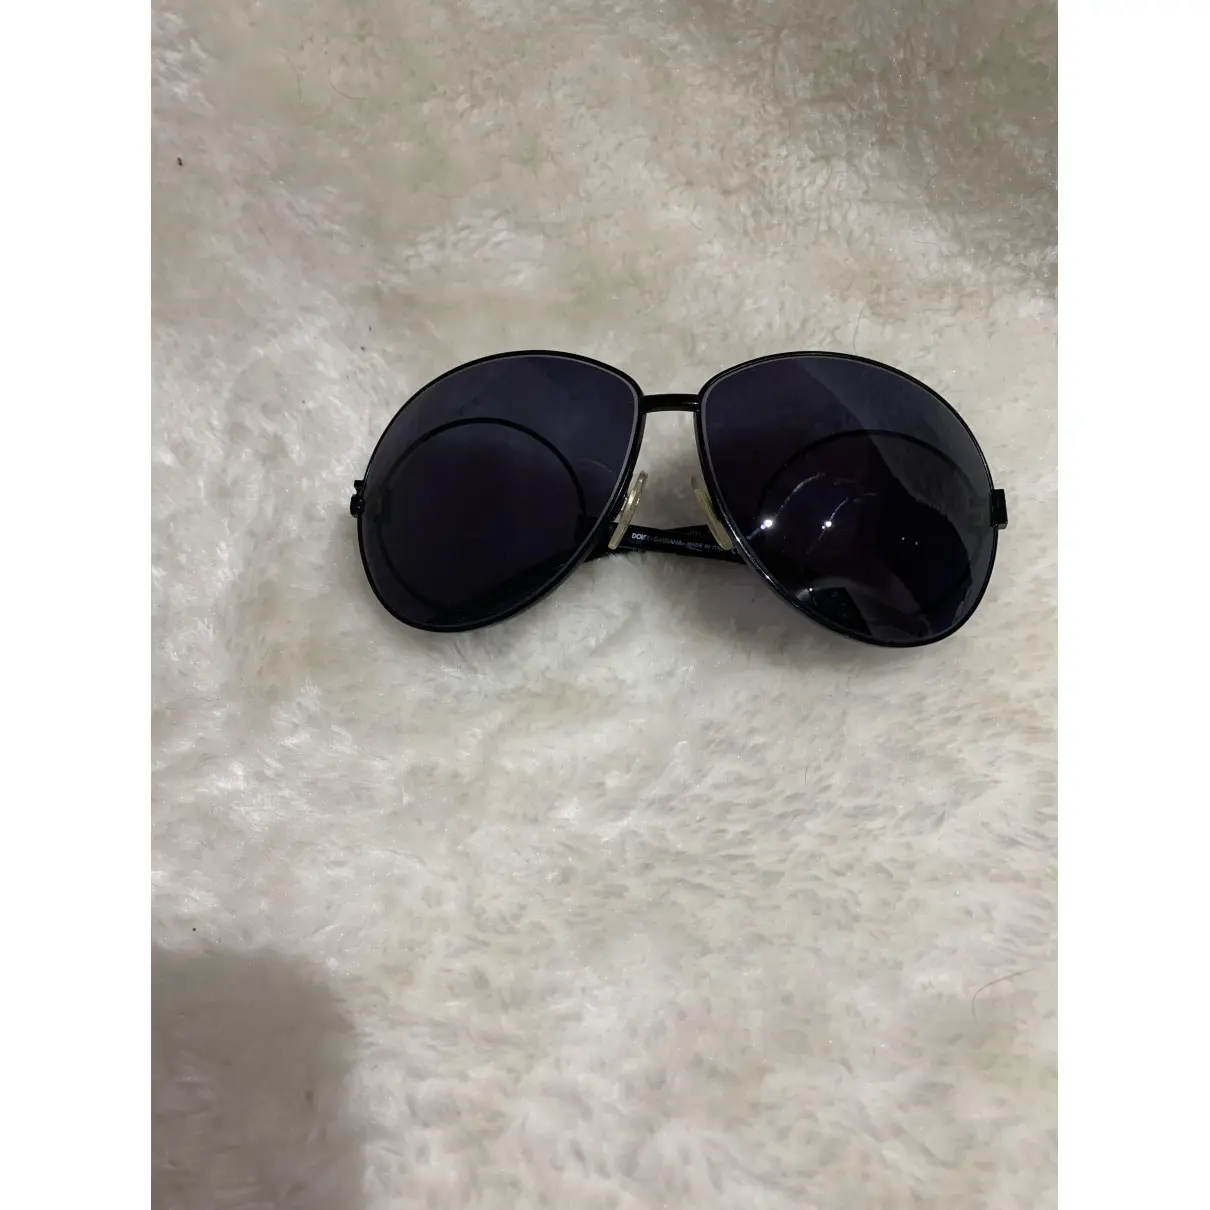 Dolce & Gabbana Sunglasses for sale